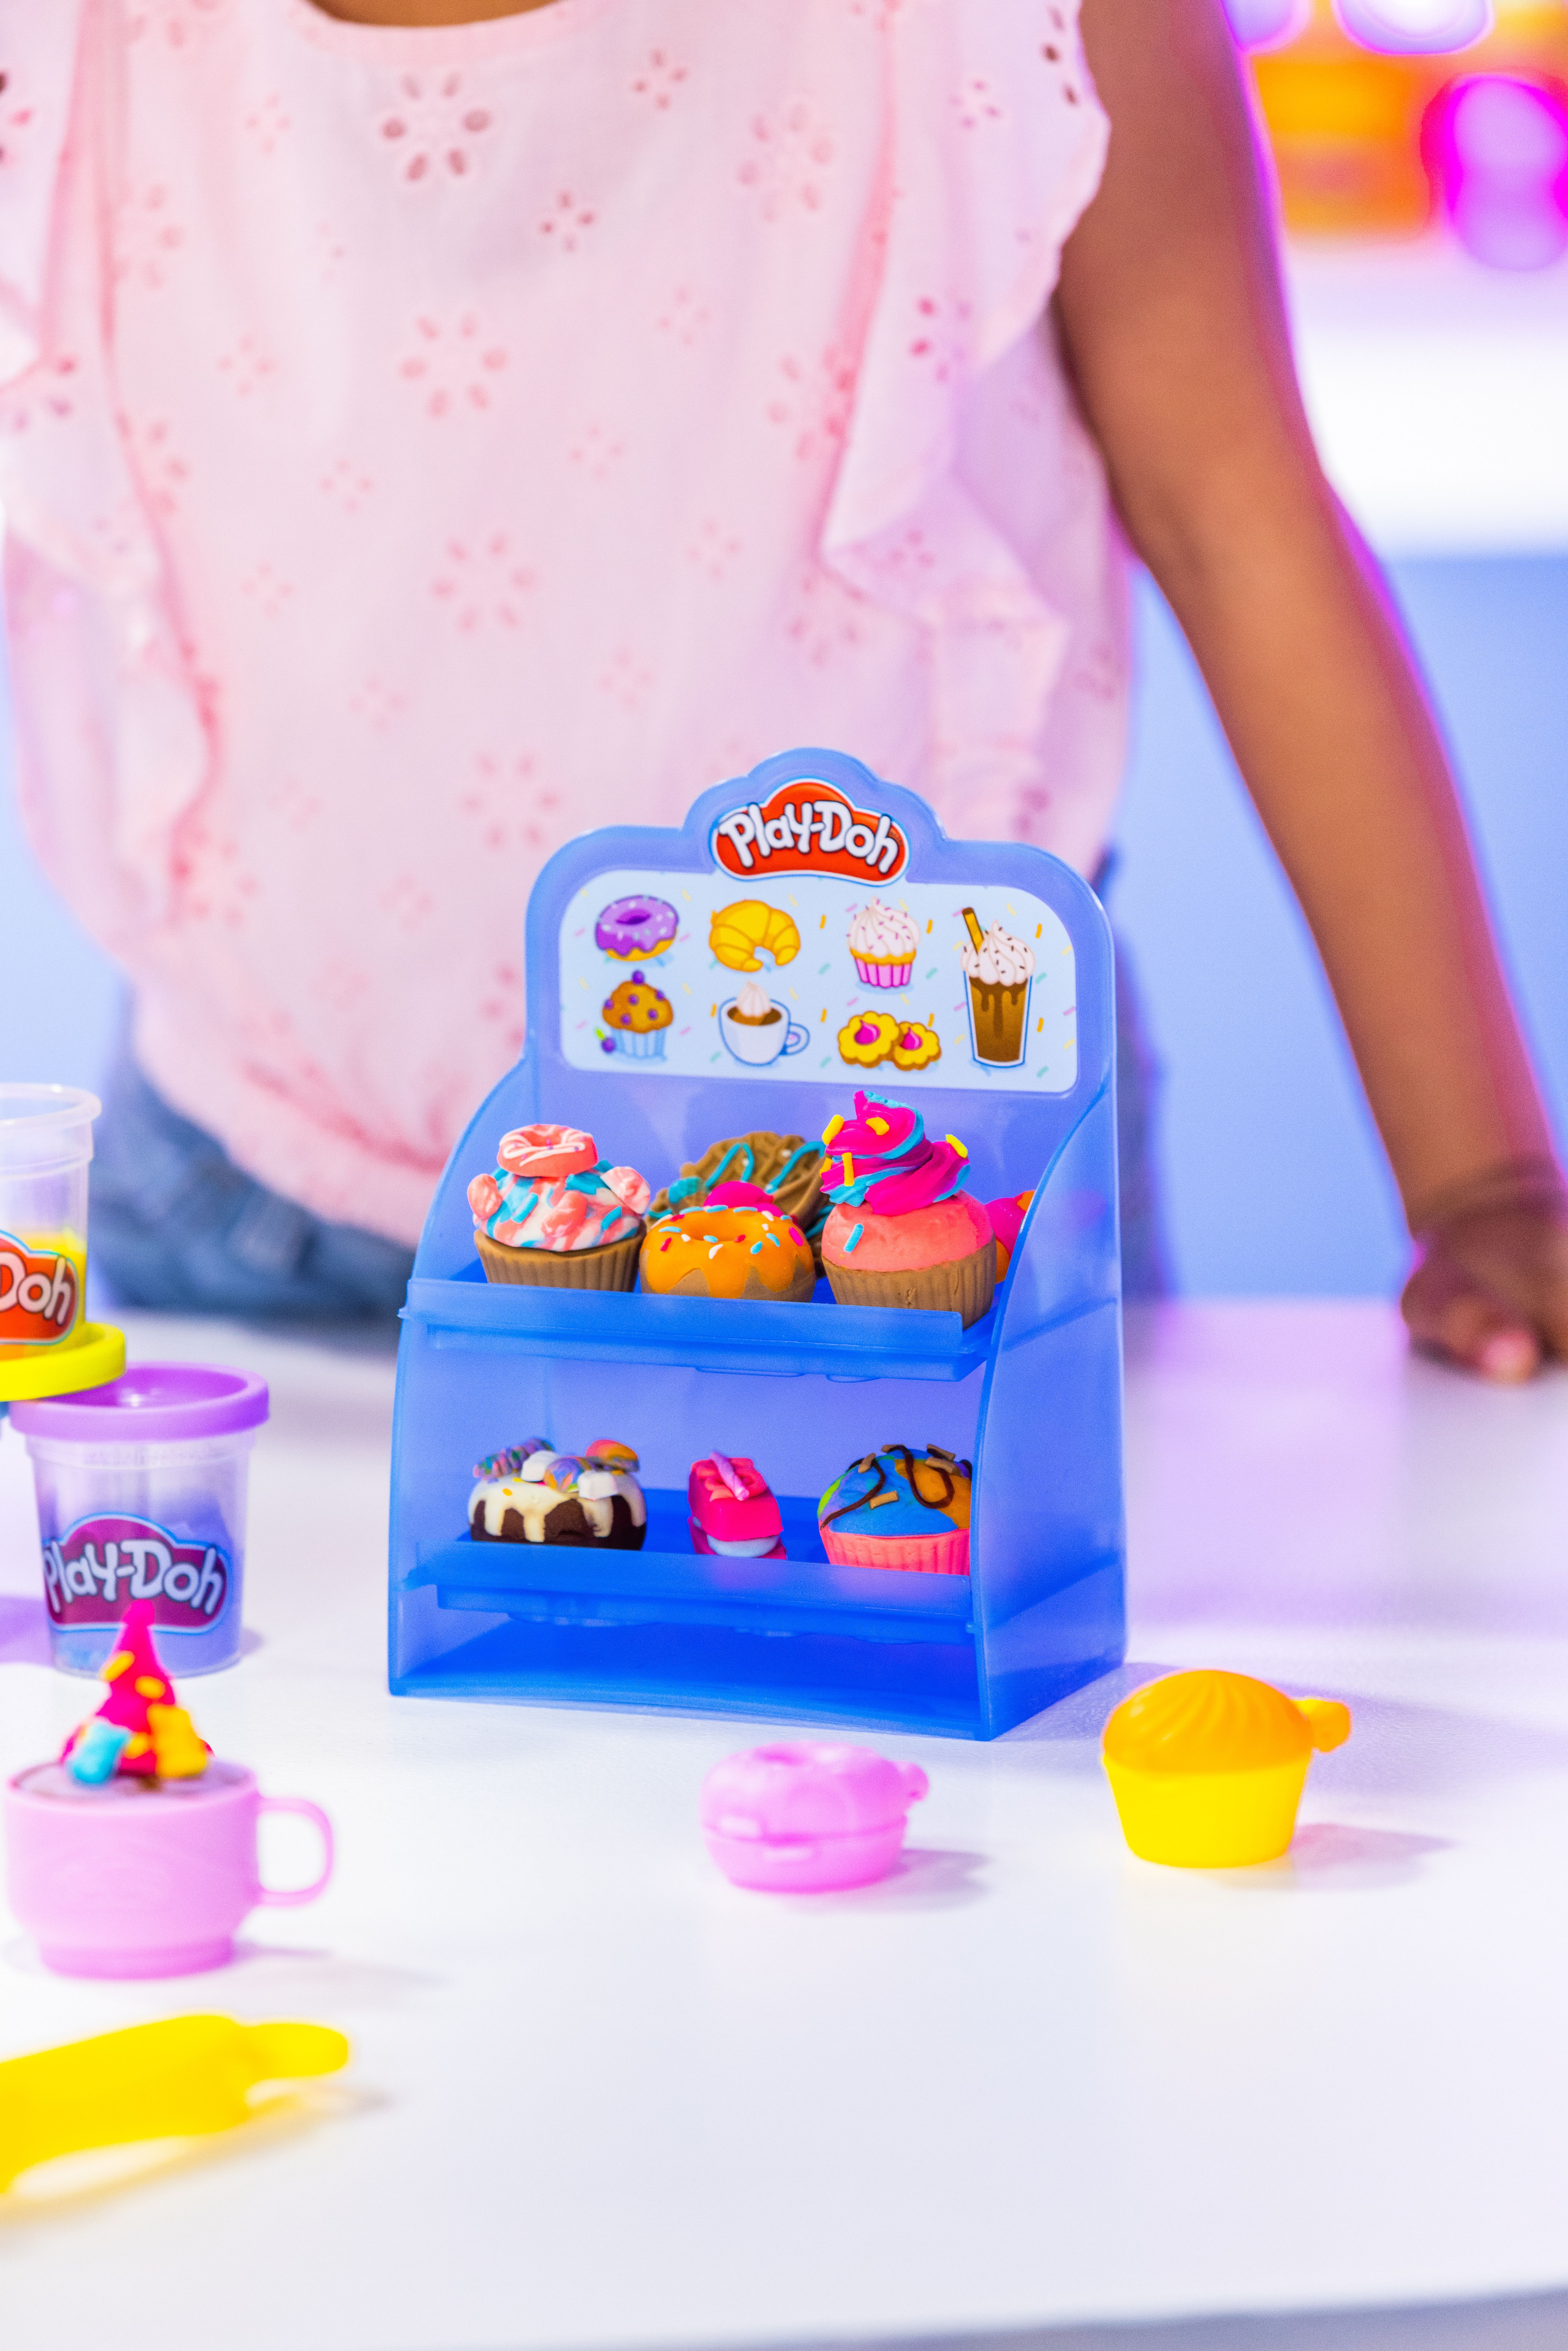 HASBRO GAMING Play-Doh Knetspaß Spielset, Mehrfarbig Café